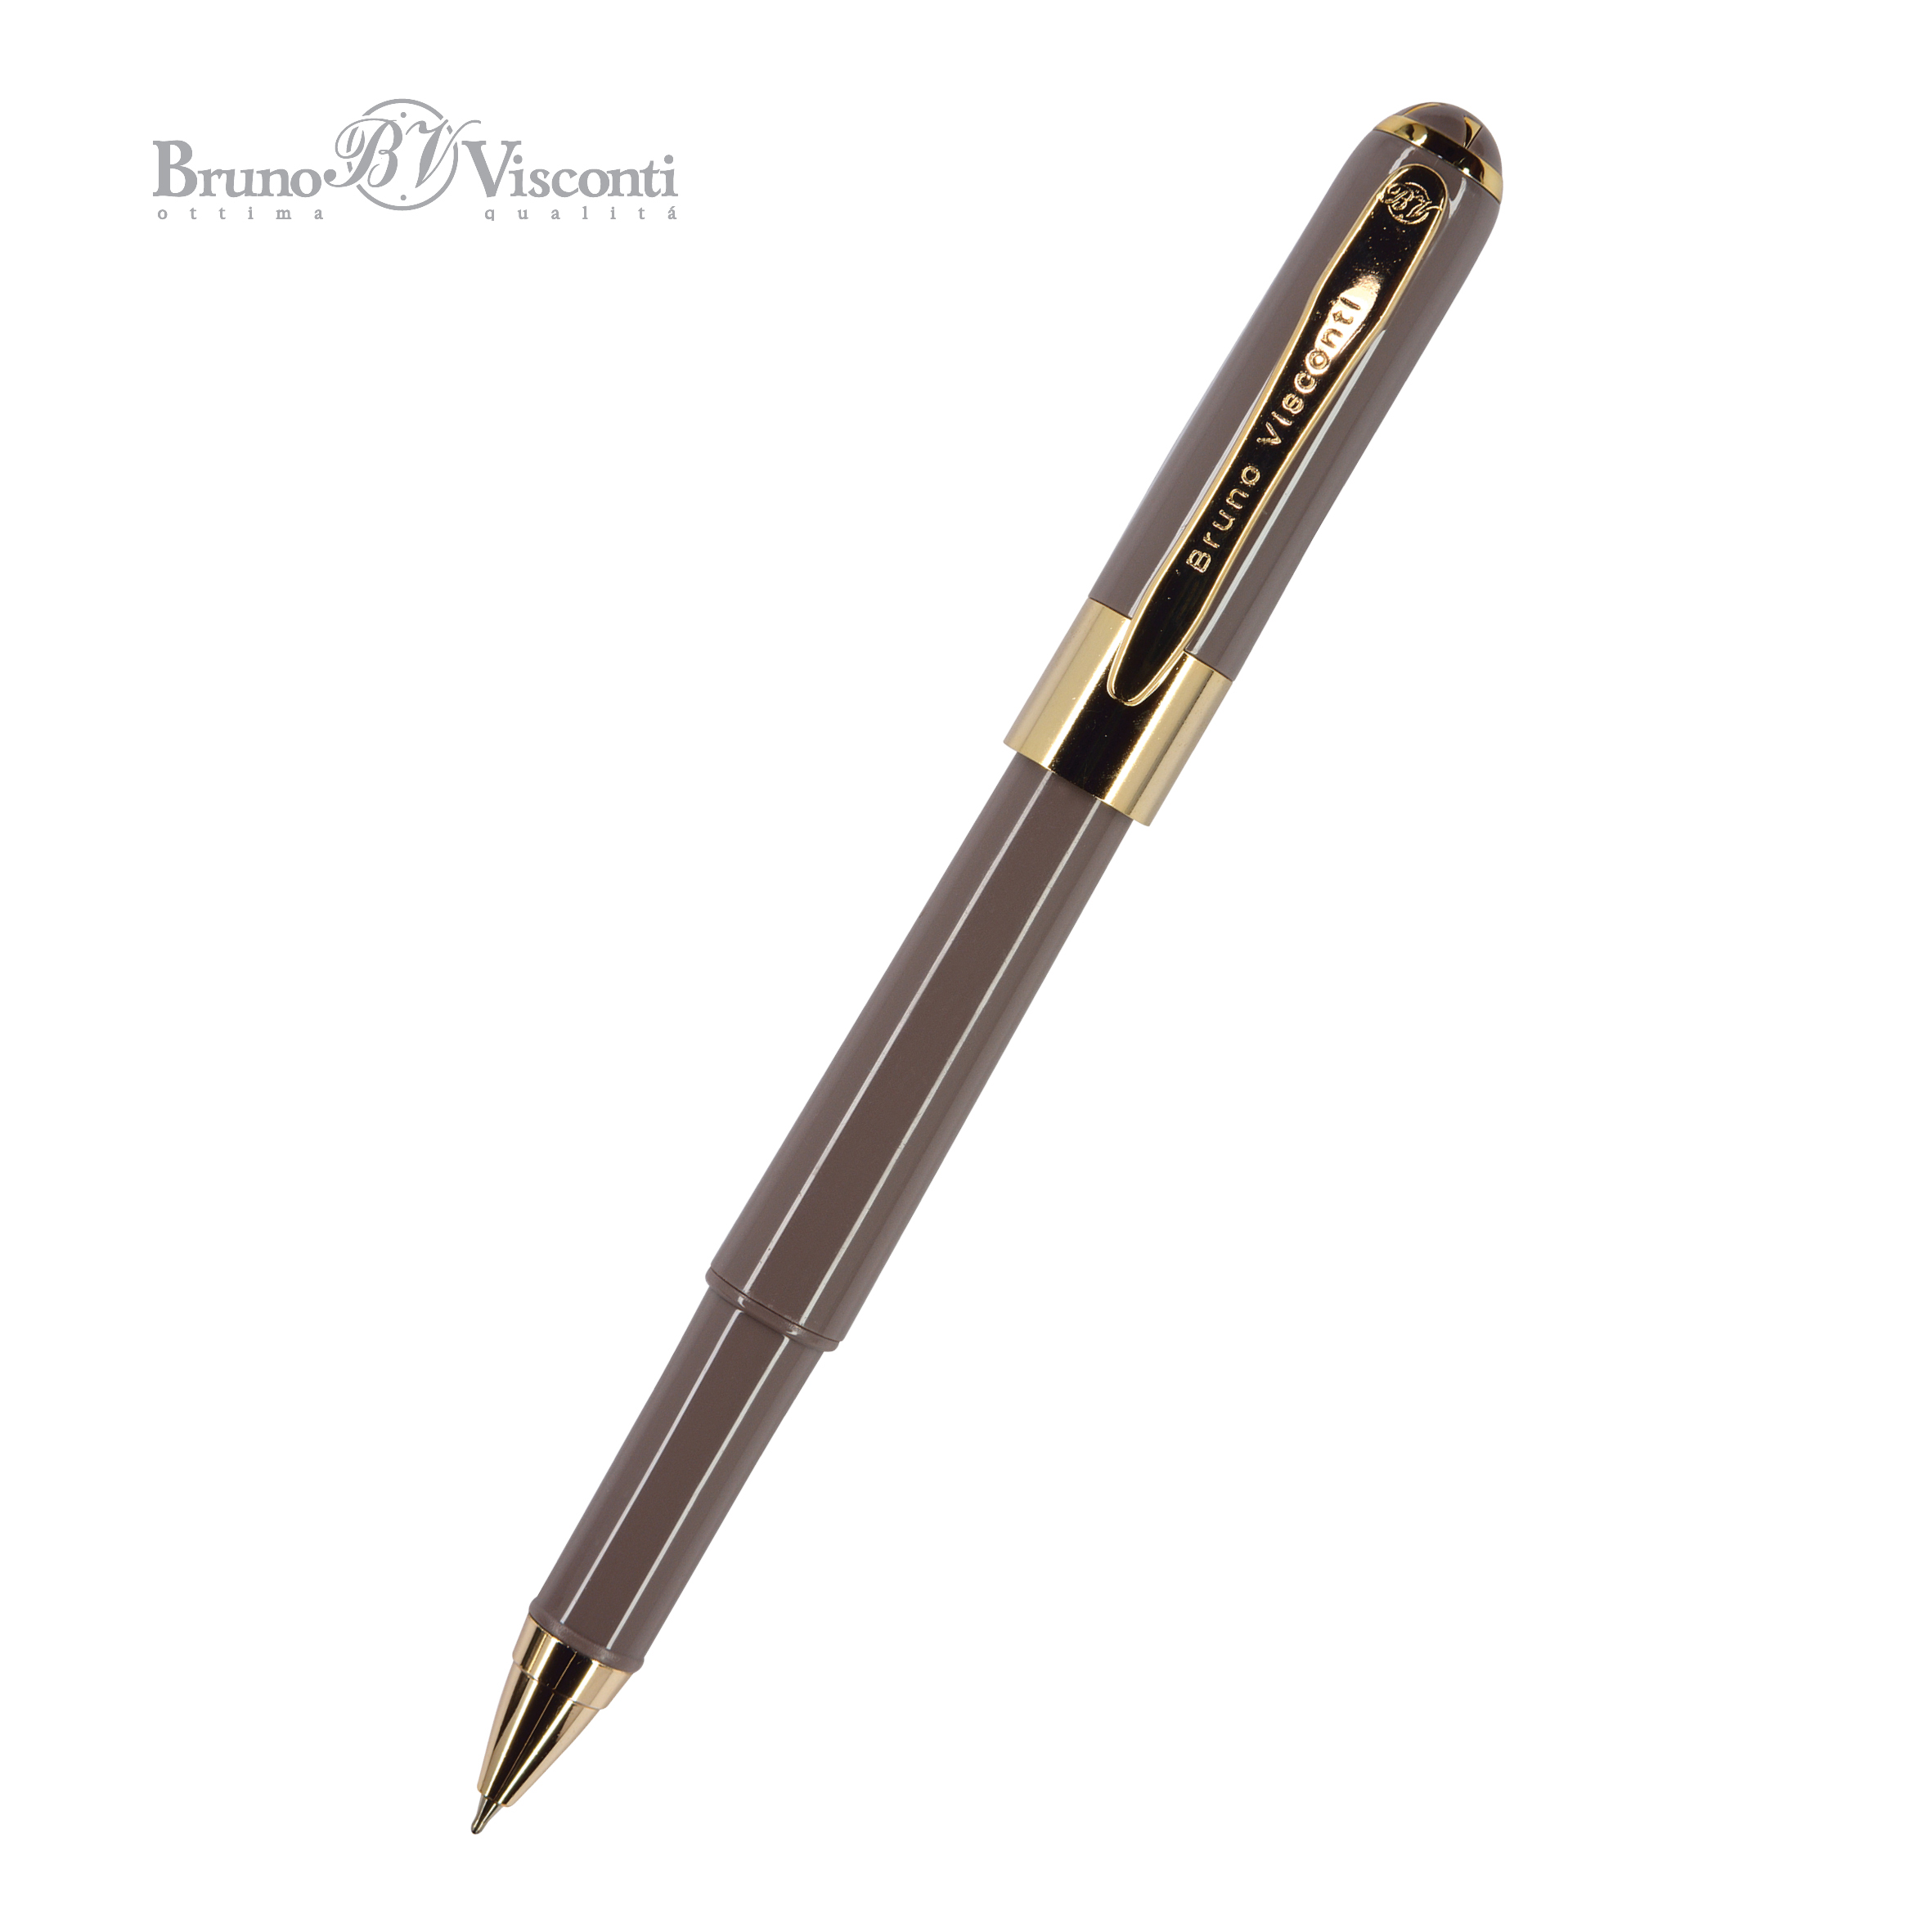 Ручка подар шар BV Monte carlo синяя 0.5 серый корпус